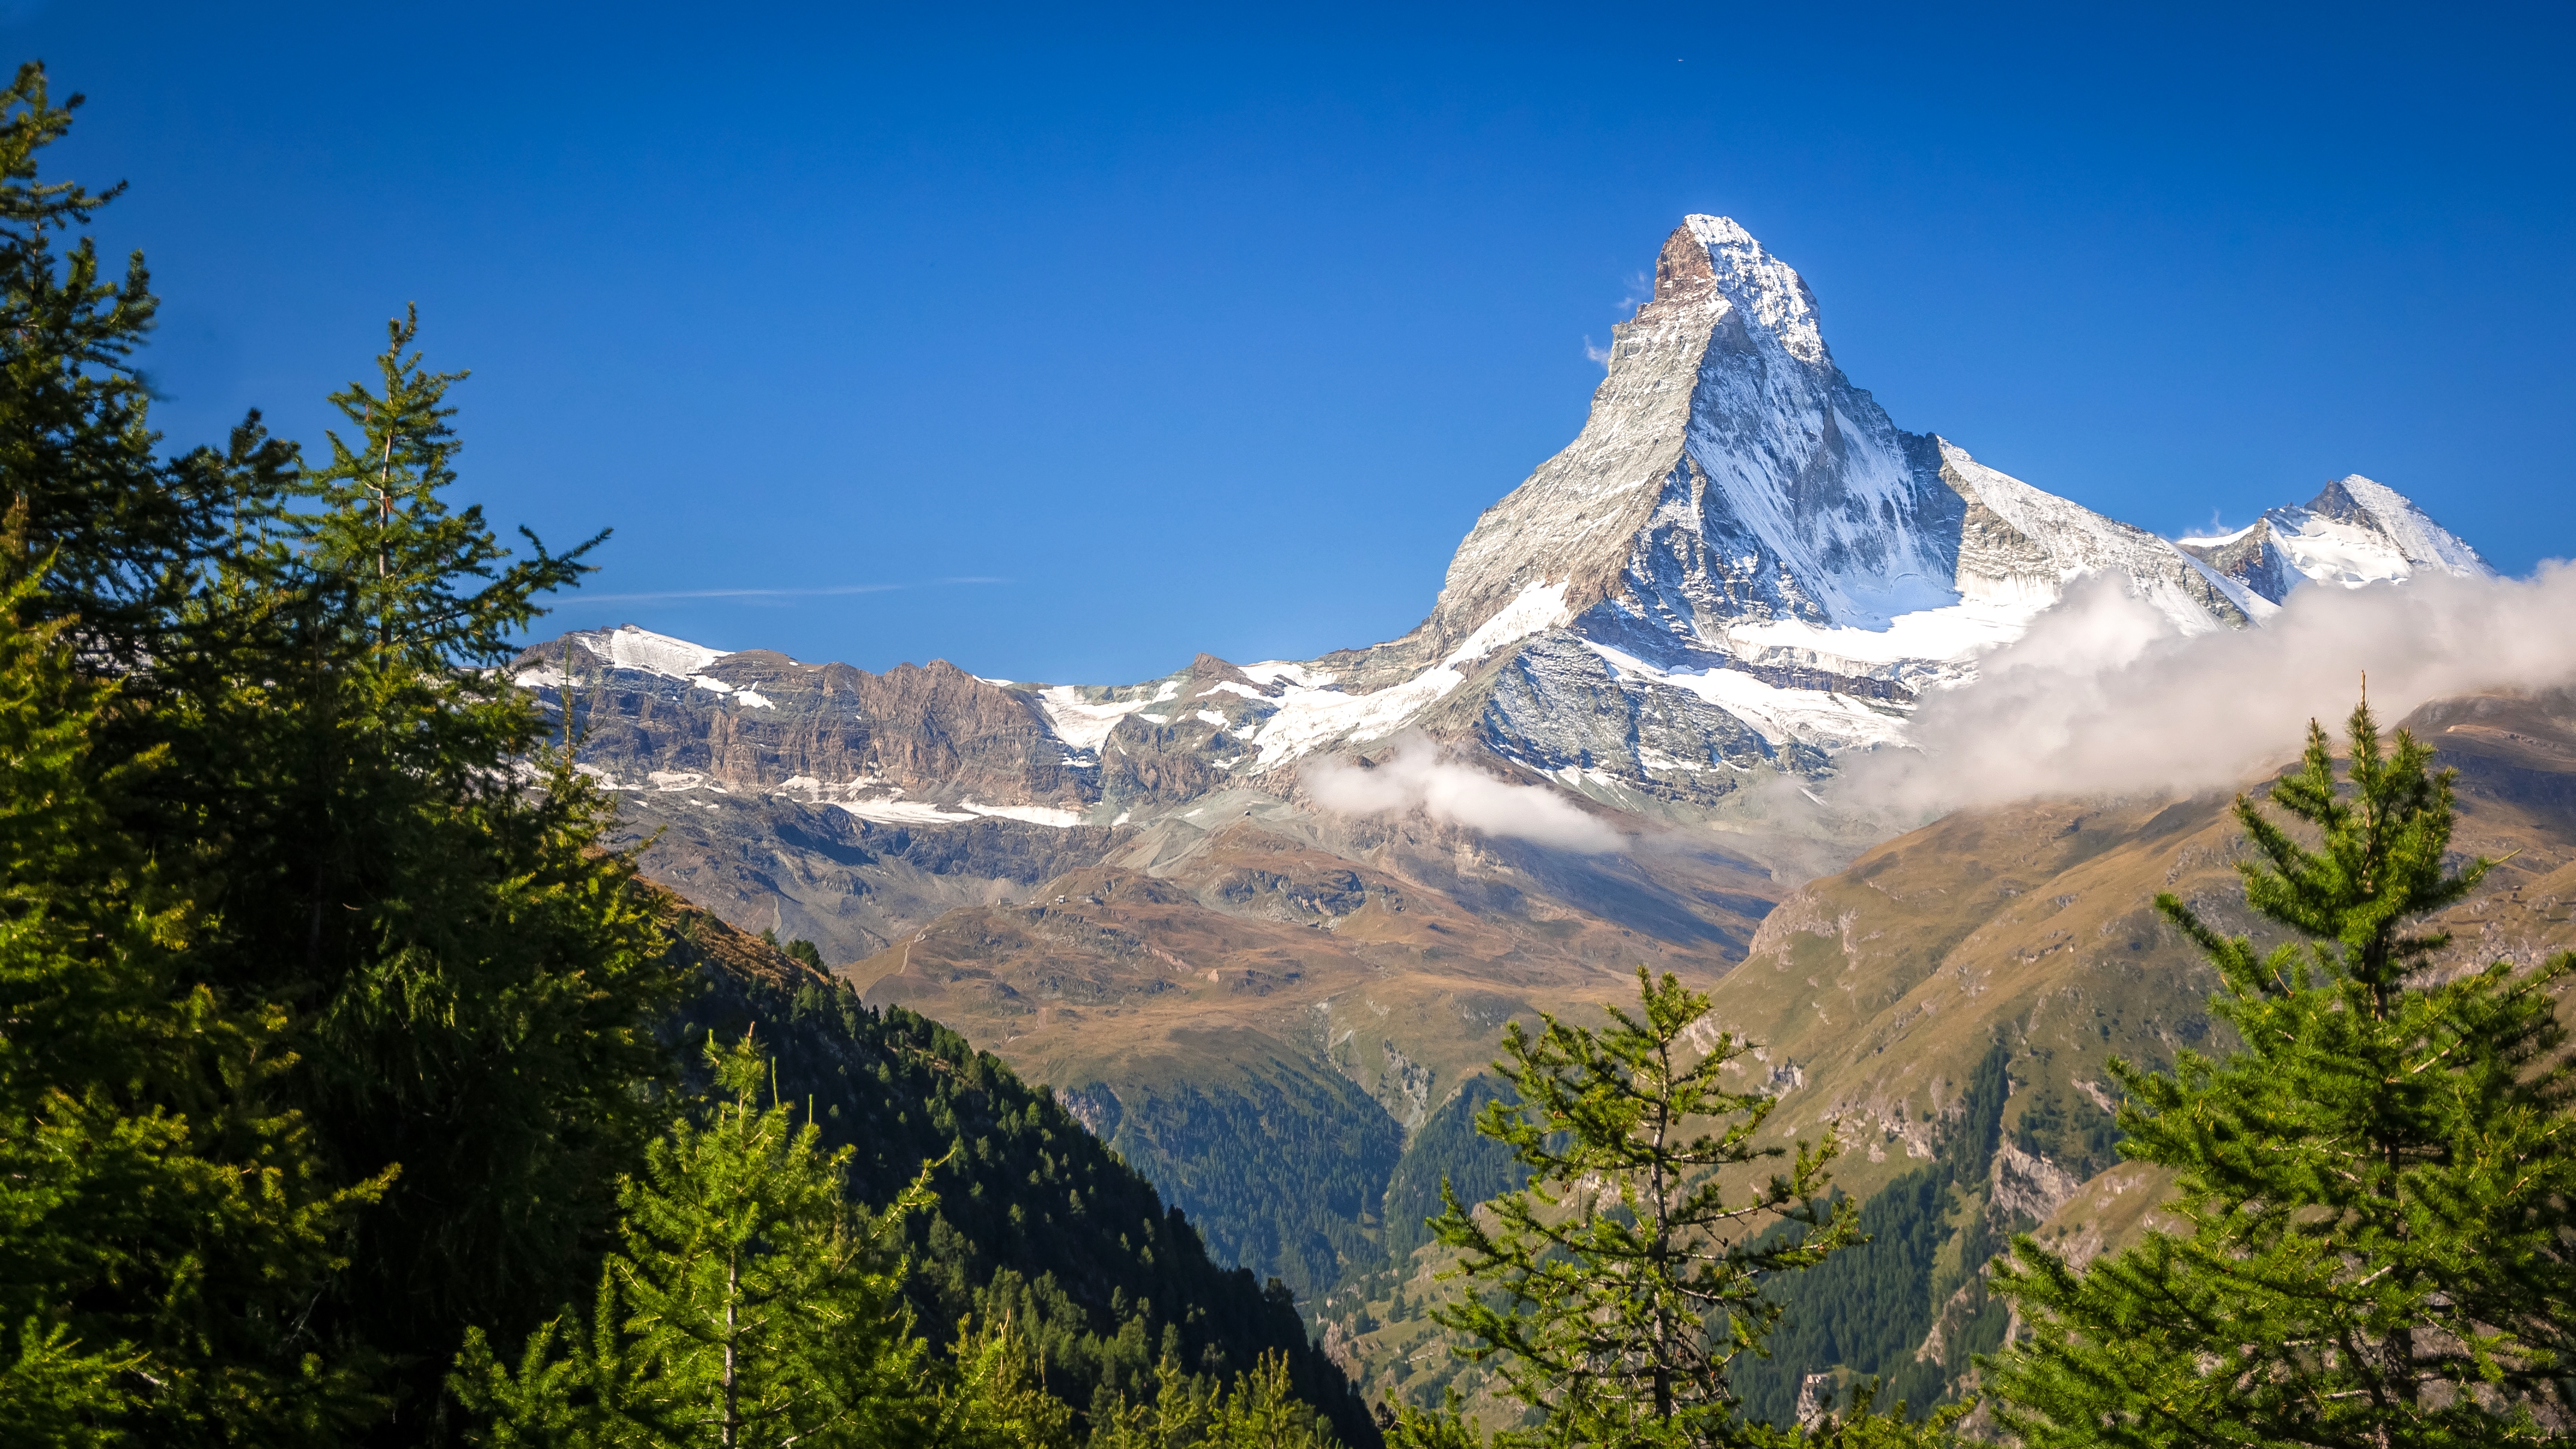 Heres how to see the Matterhorn in Zermatt in a day